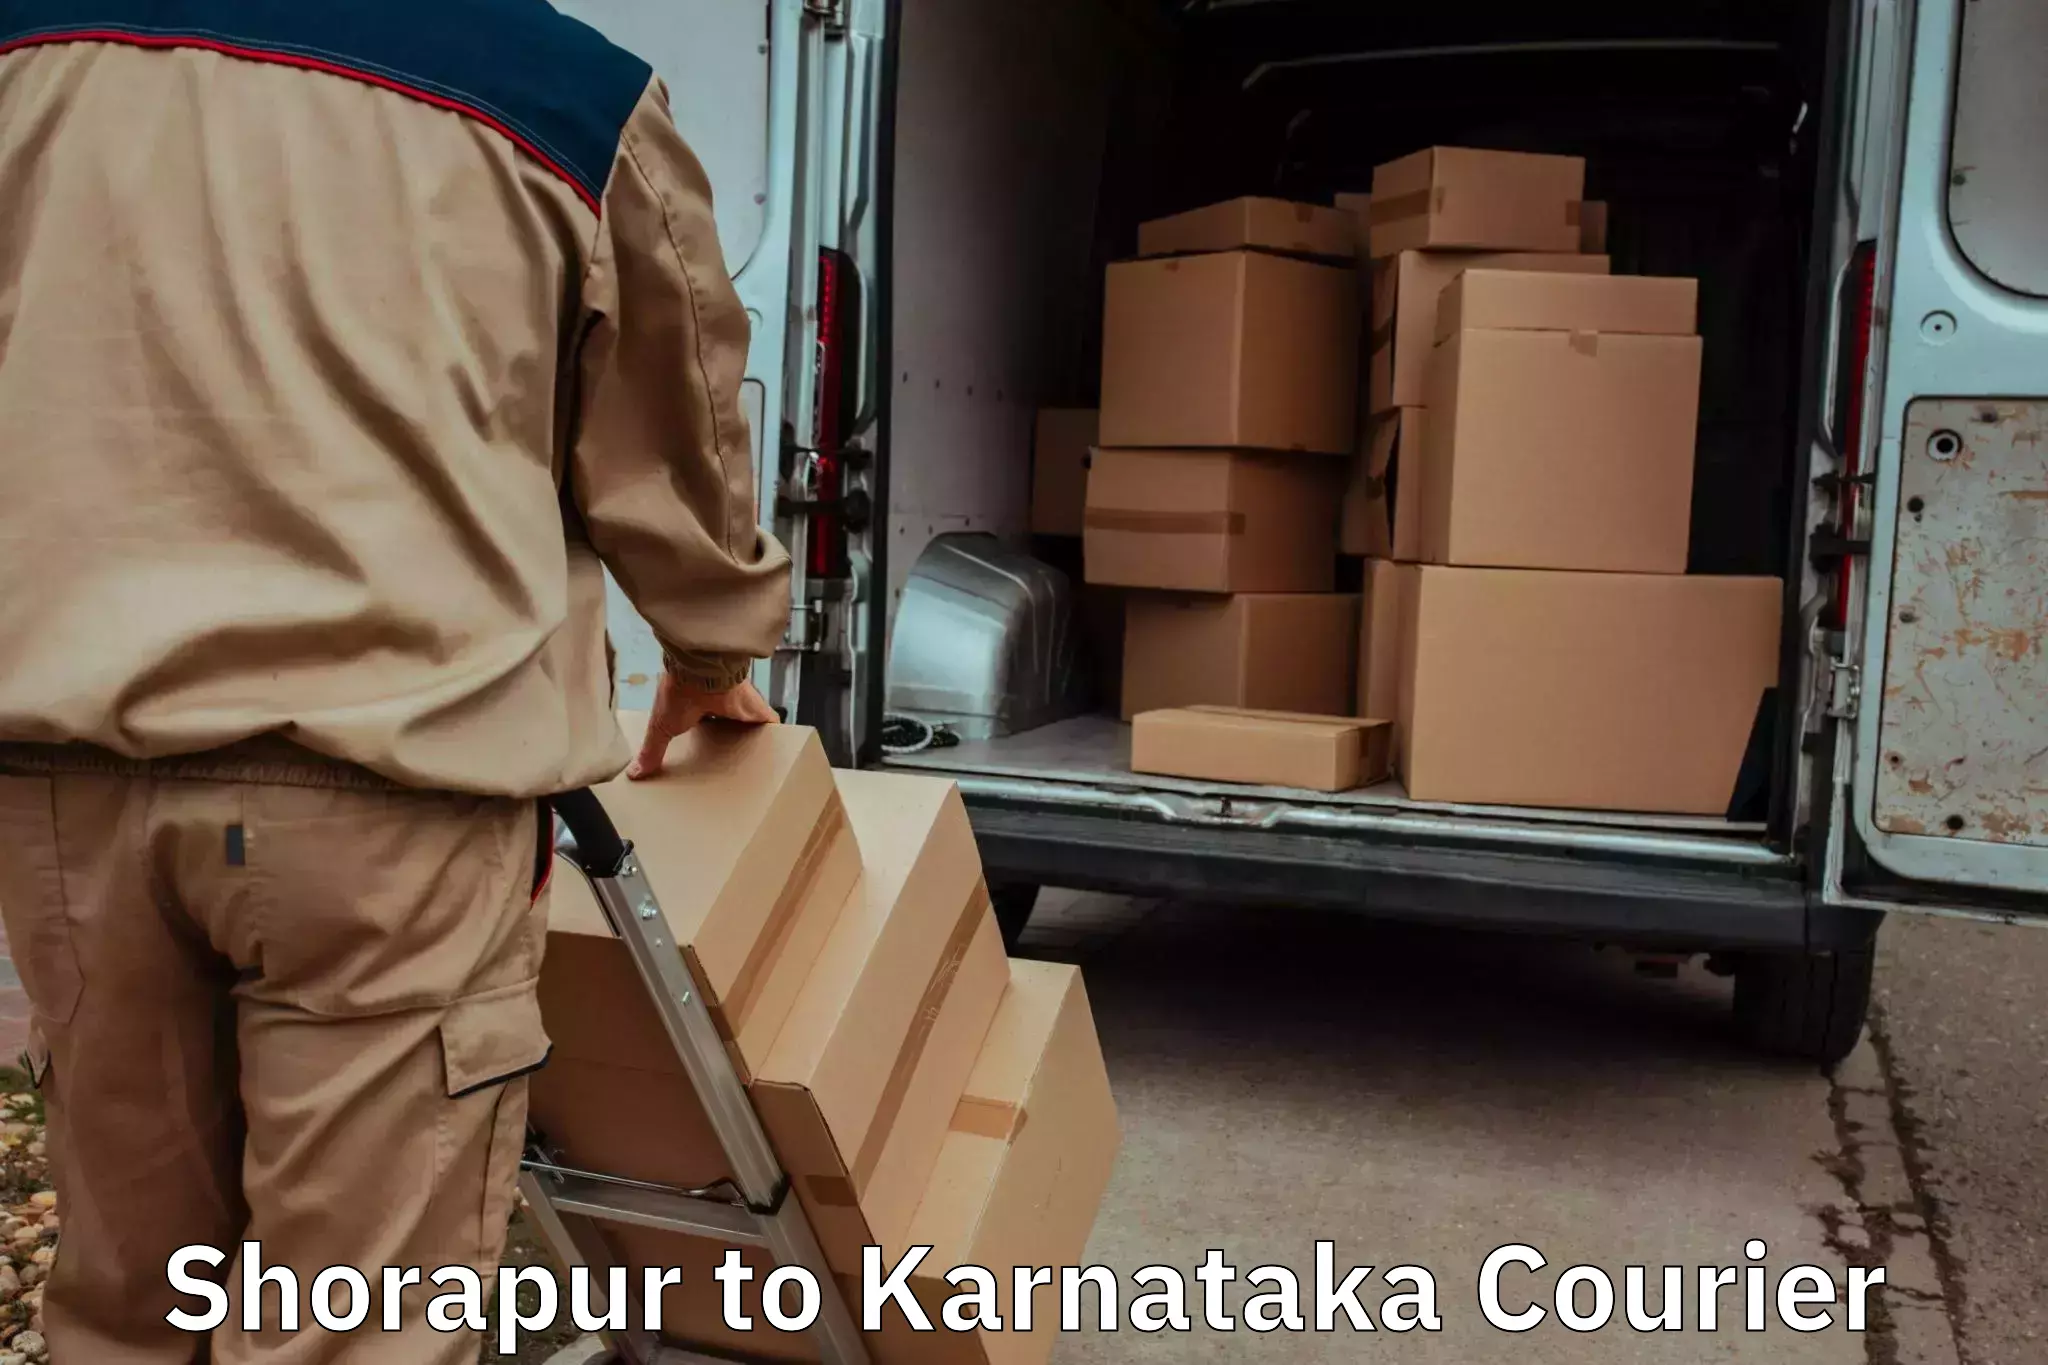 Quality relocation assistance Shorapur to Karnataka